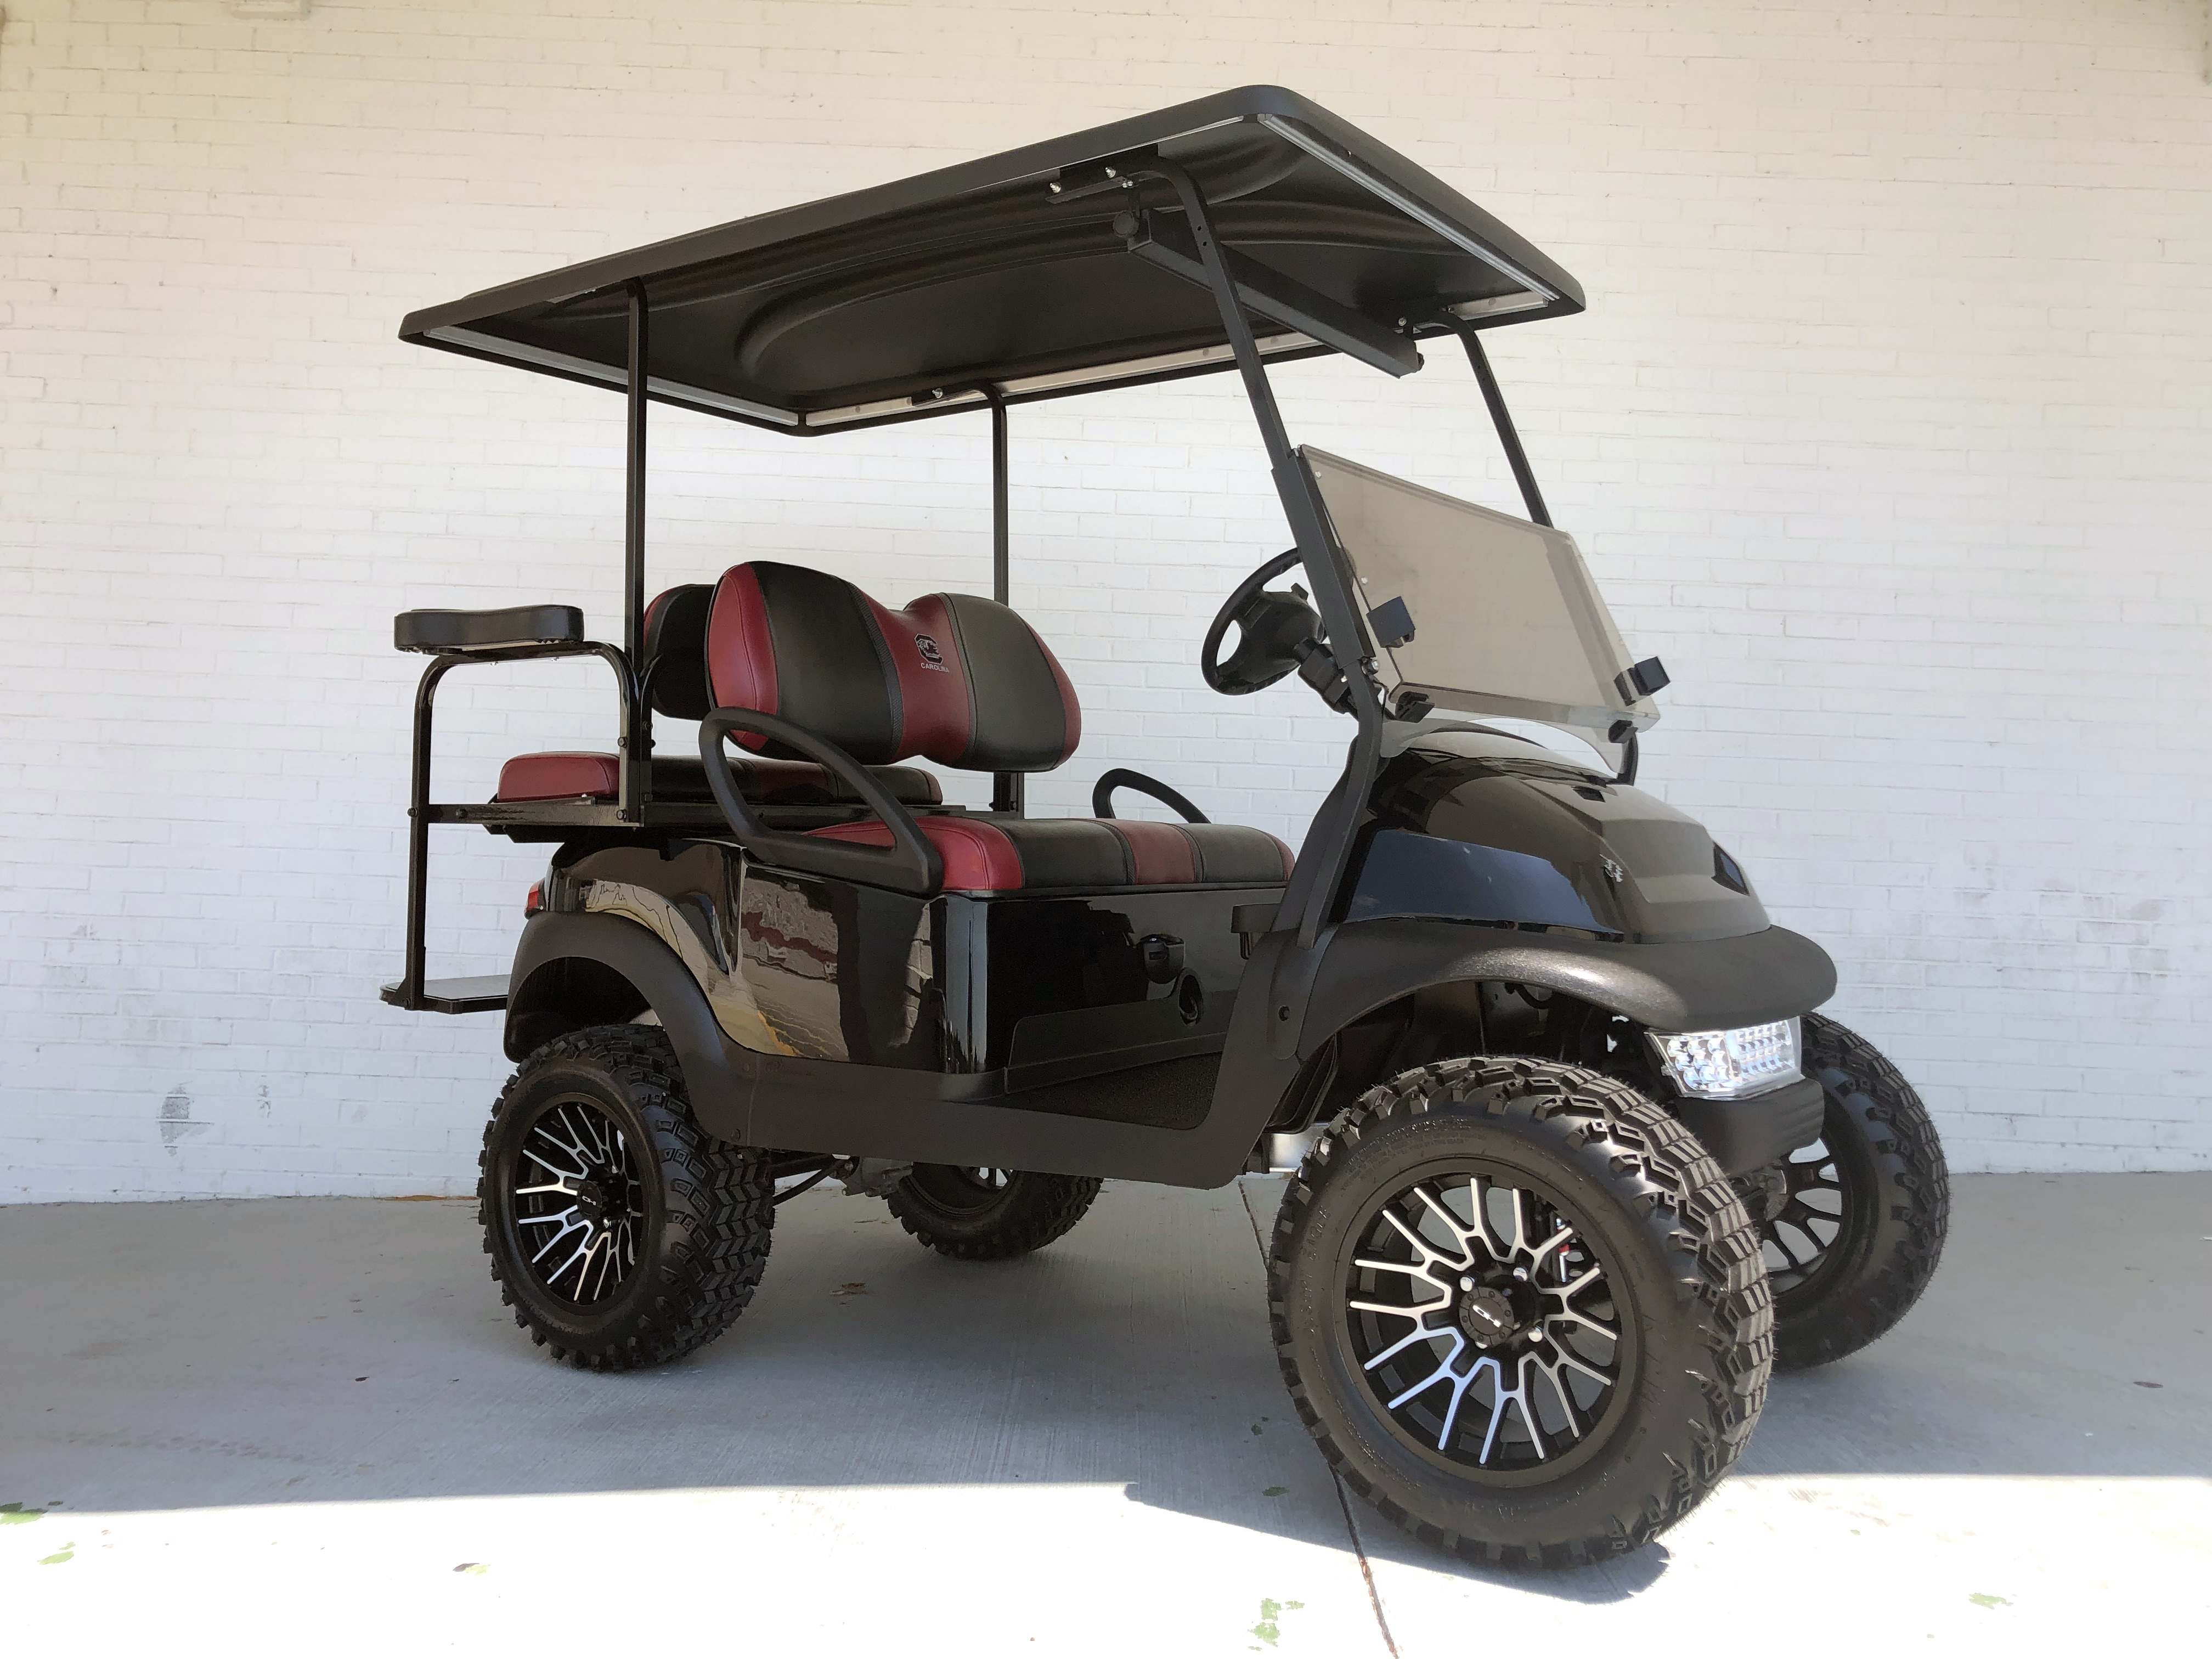 Gamecock Black & Burgundy Lifted Club Car Golf Cart